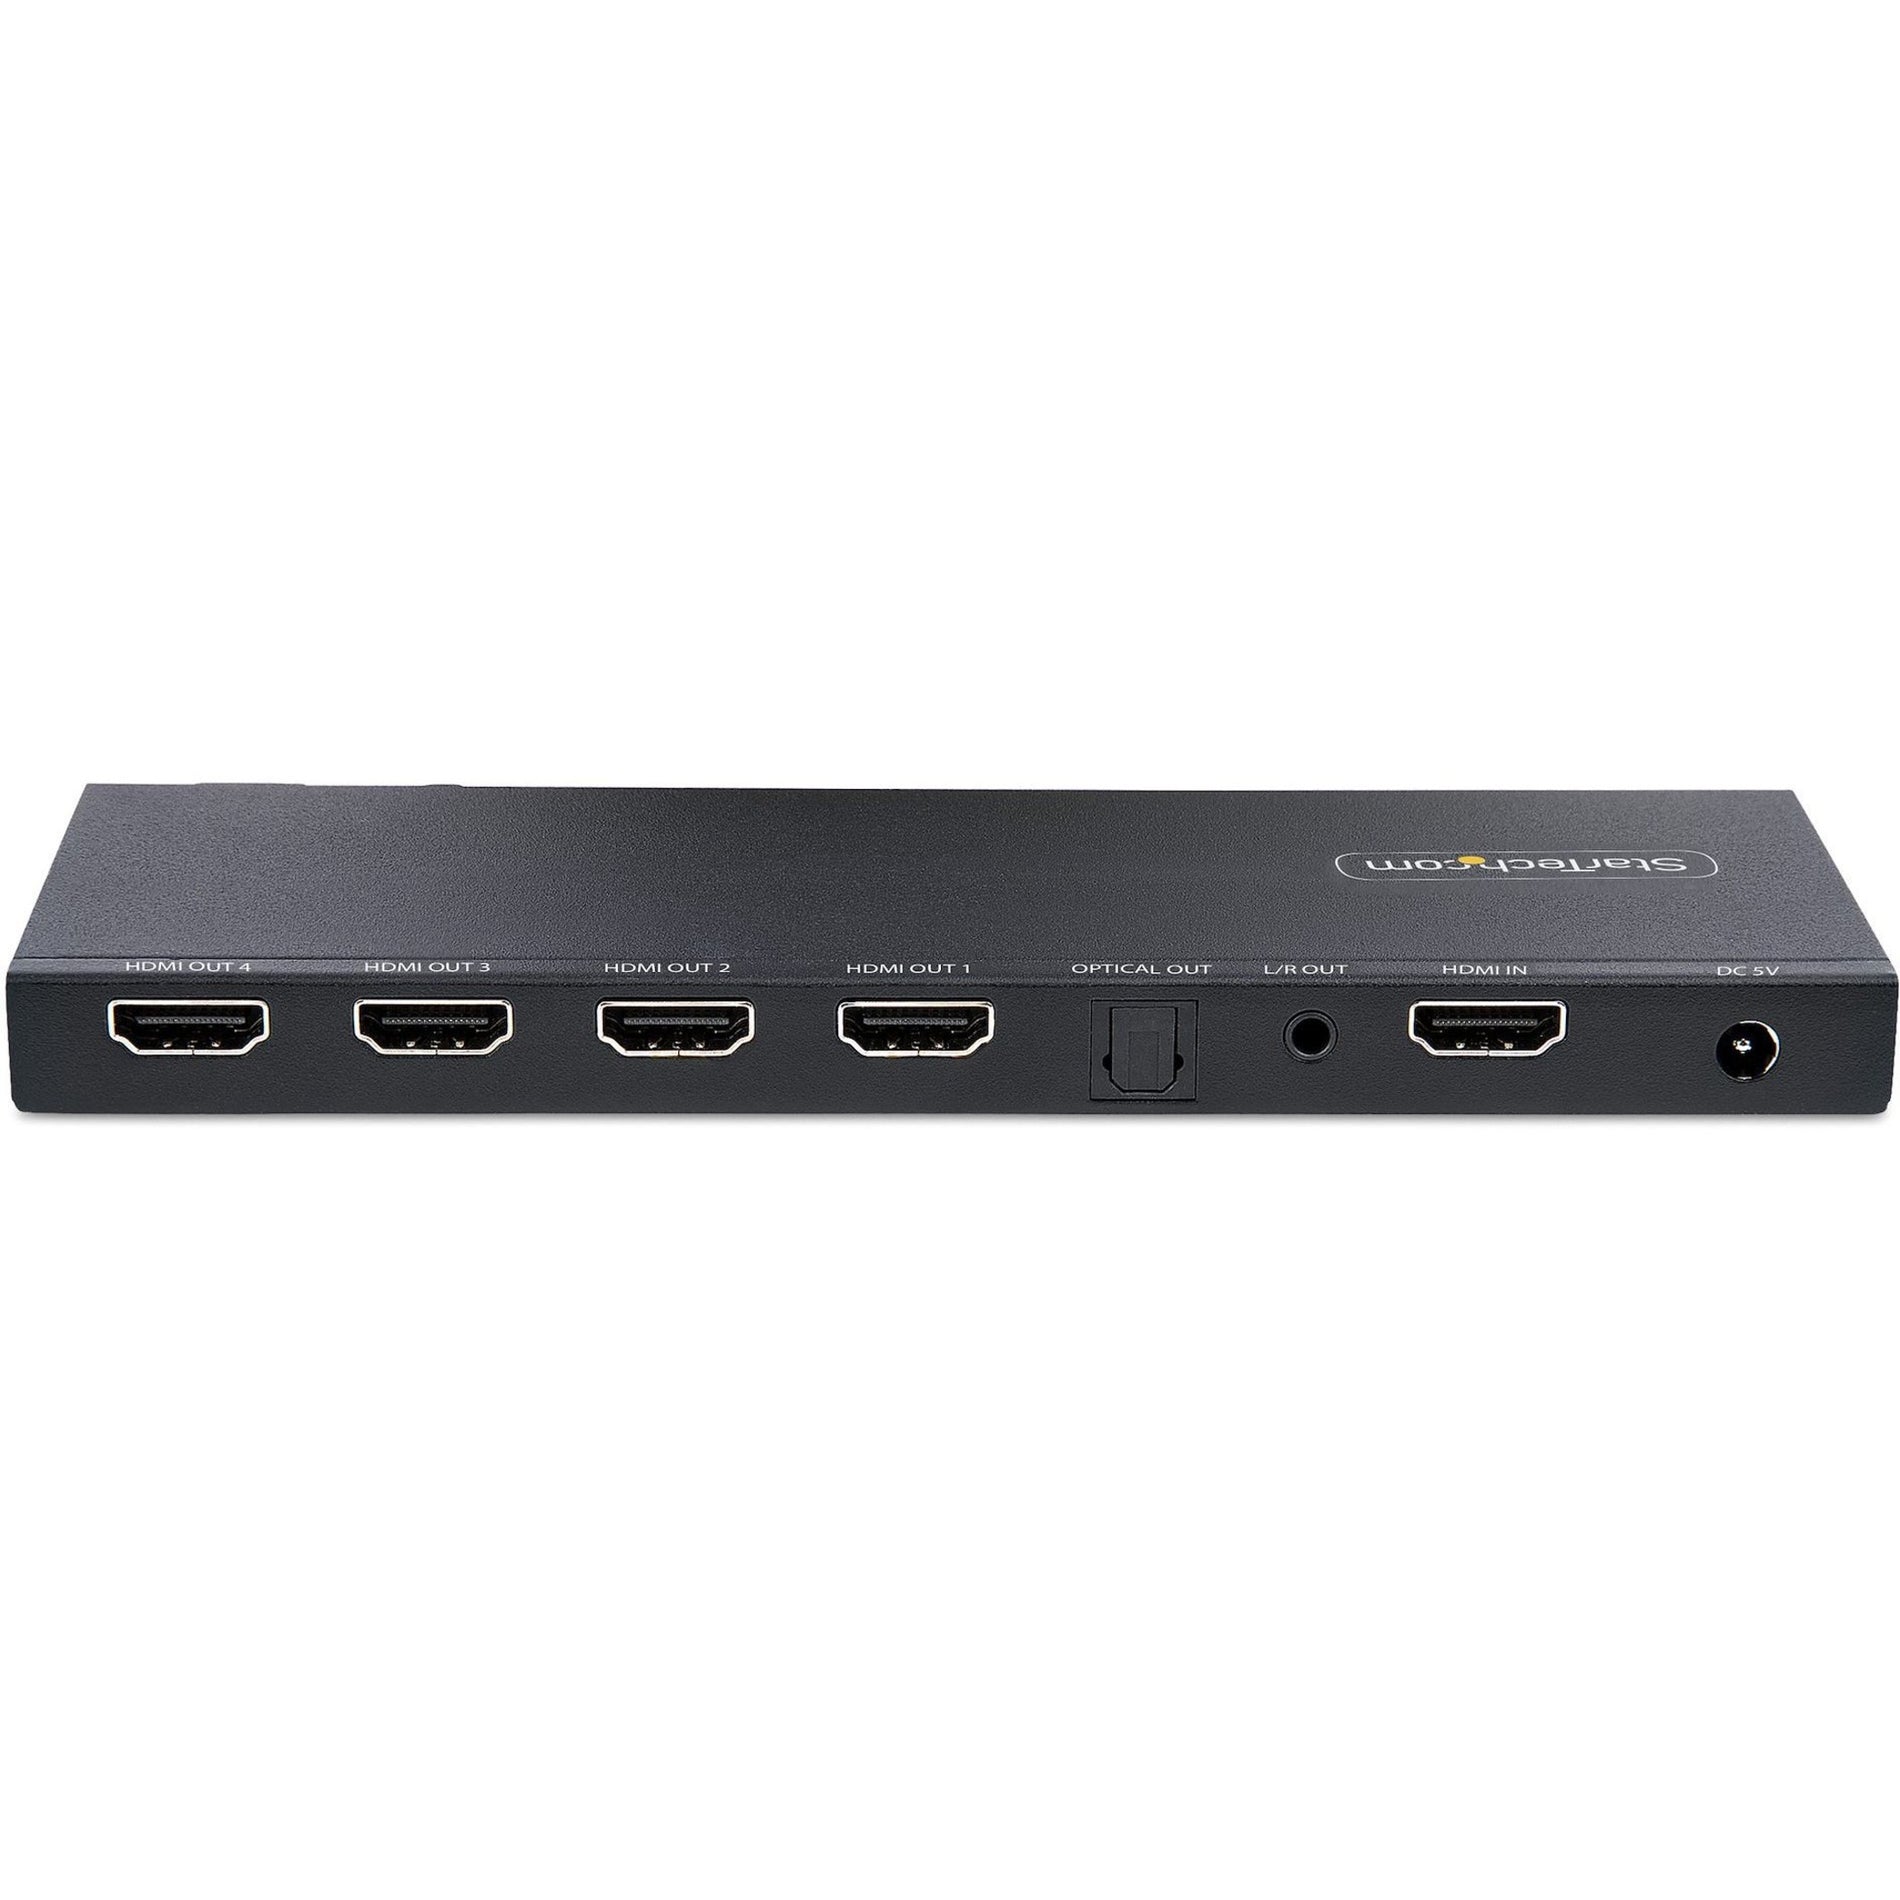 StarTech.com HDMI-SPLITTER-44K60S 4-port HDMI Video Splitter, 3840x2160 Resolution, 2 Year Warranty, USB Powered